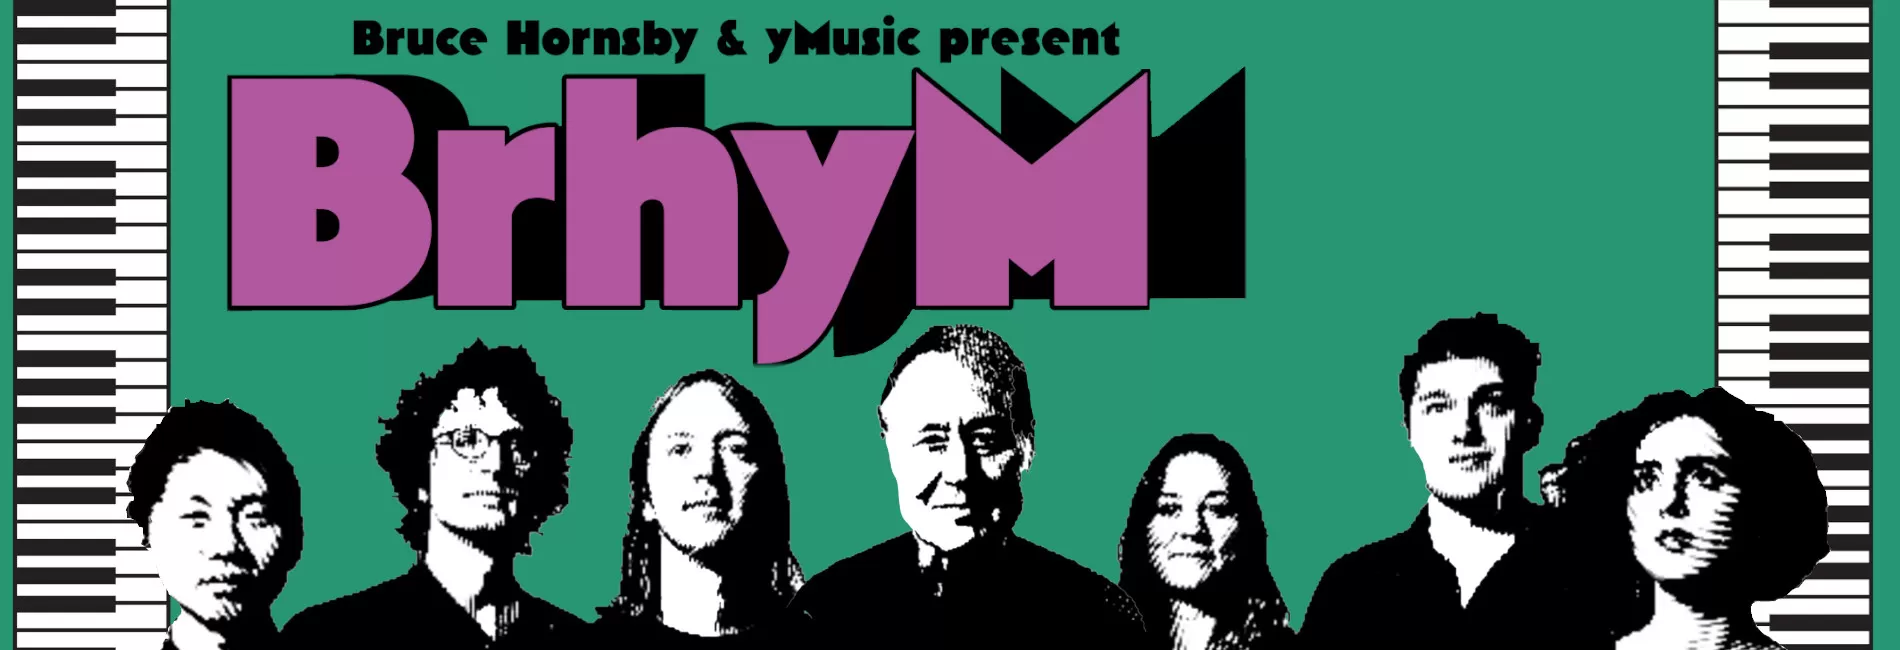 Bruce Hornsby & yMusic present BrhyM